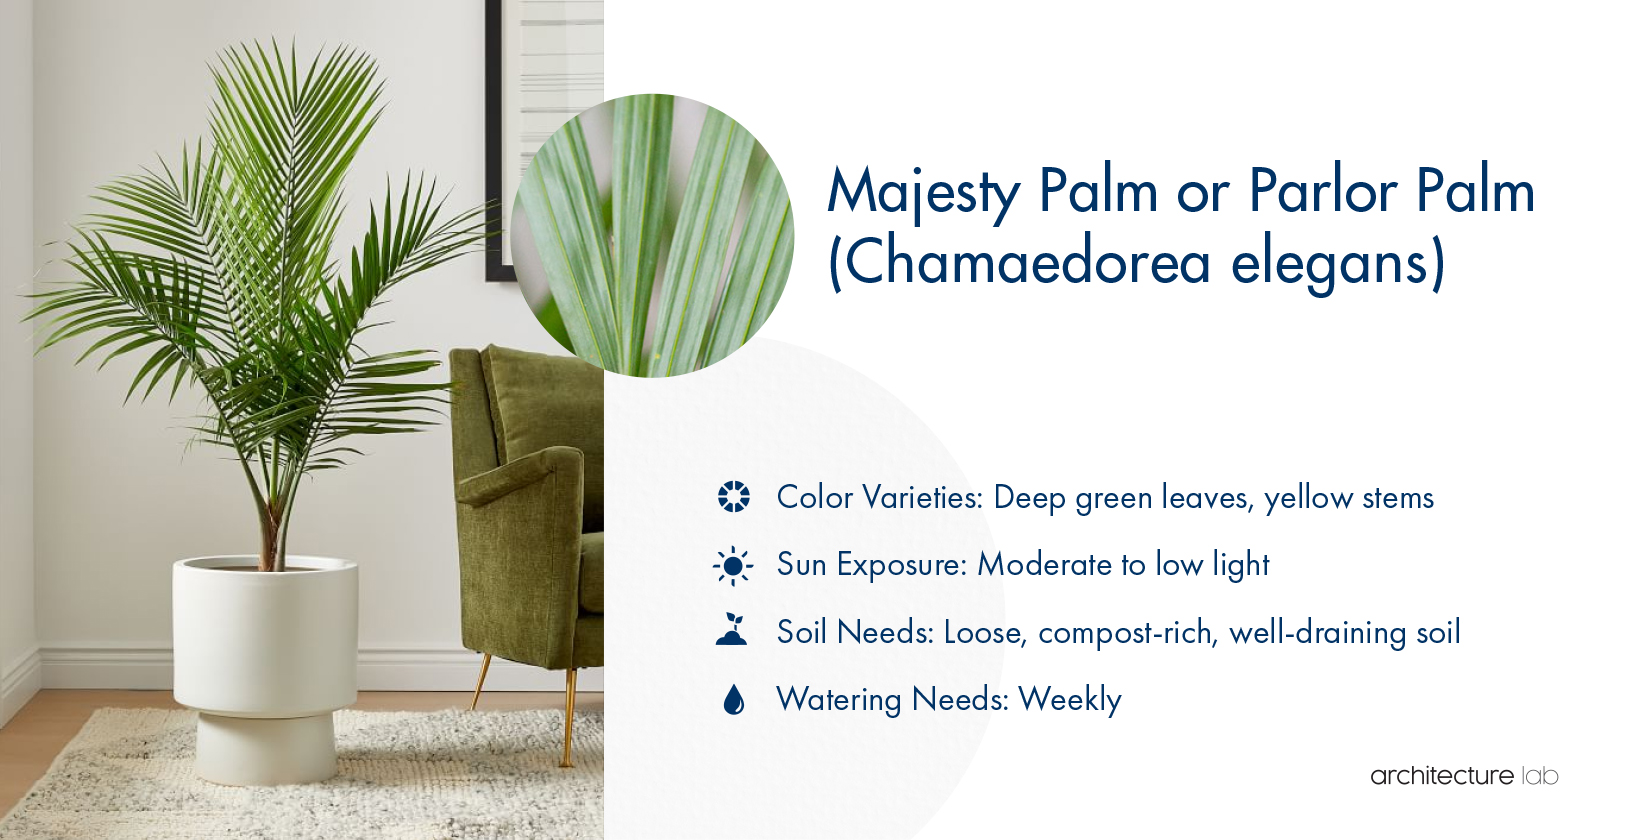 18. Majesty palm or parlor palm (chamaedorea elegans)